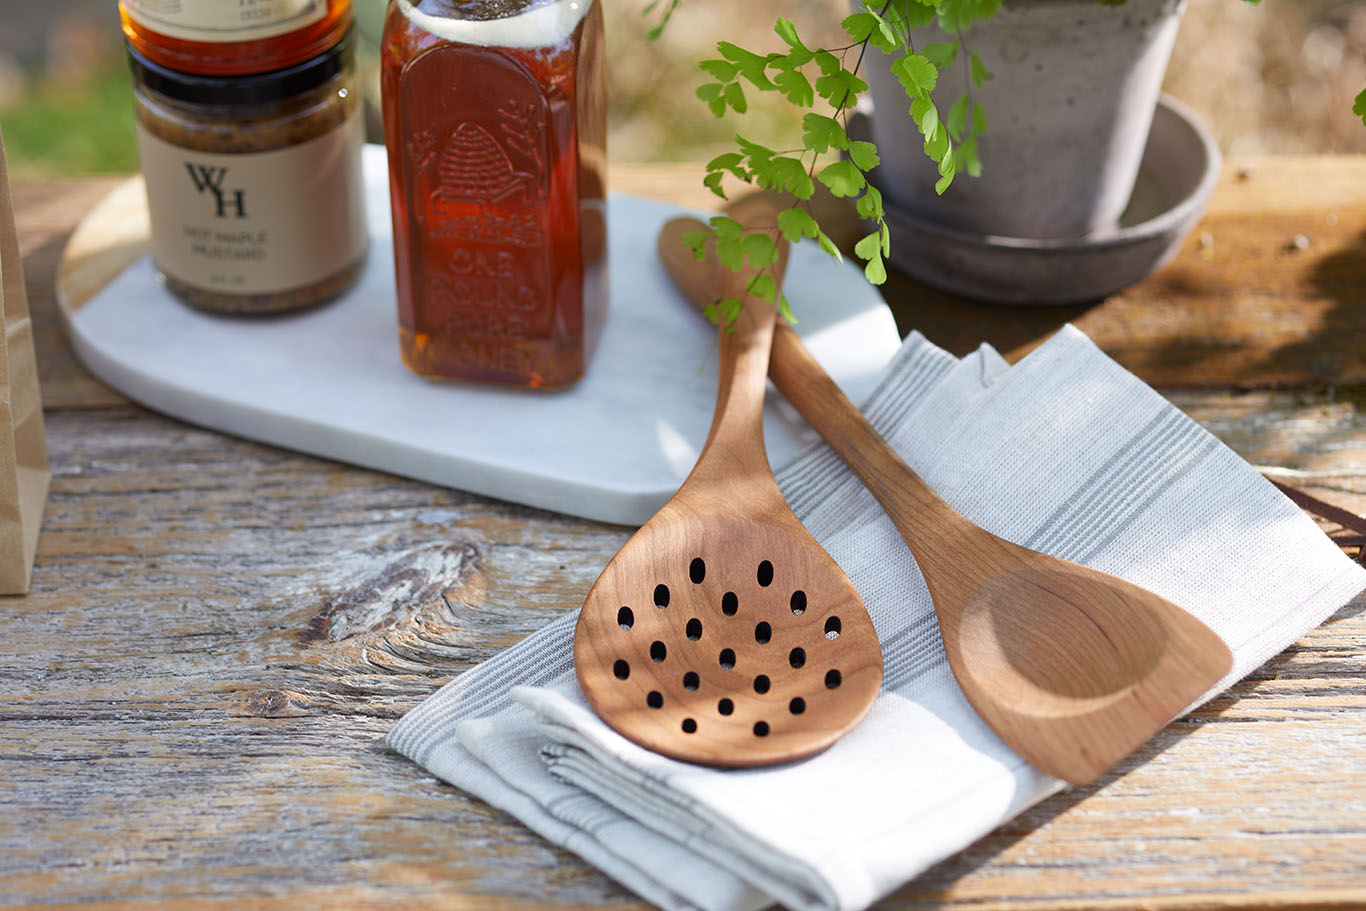 Olive wood strainer spoon, skimmer